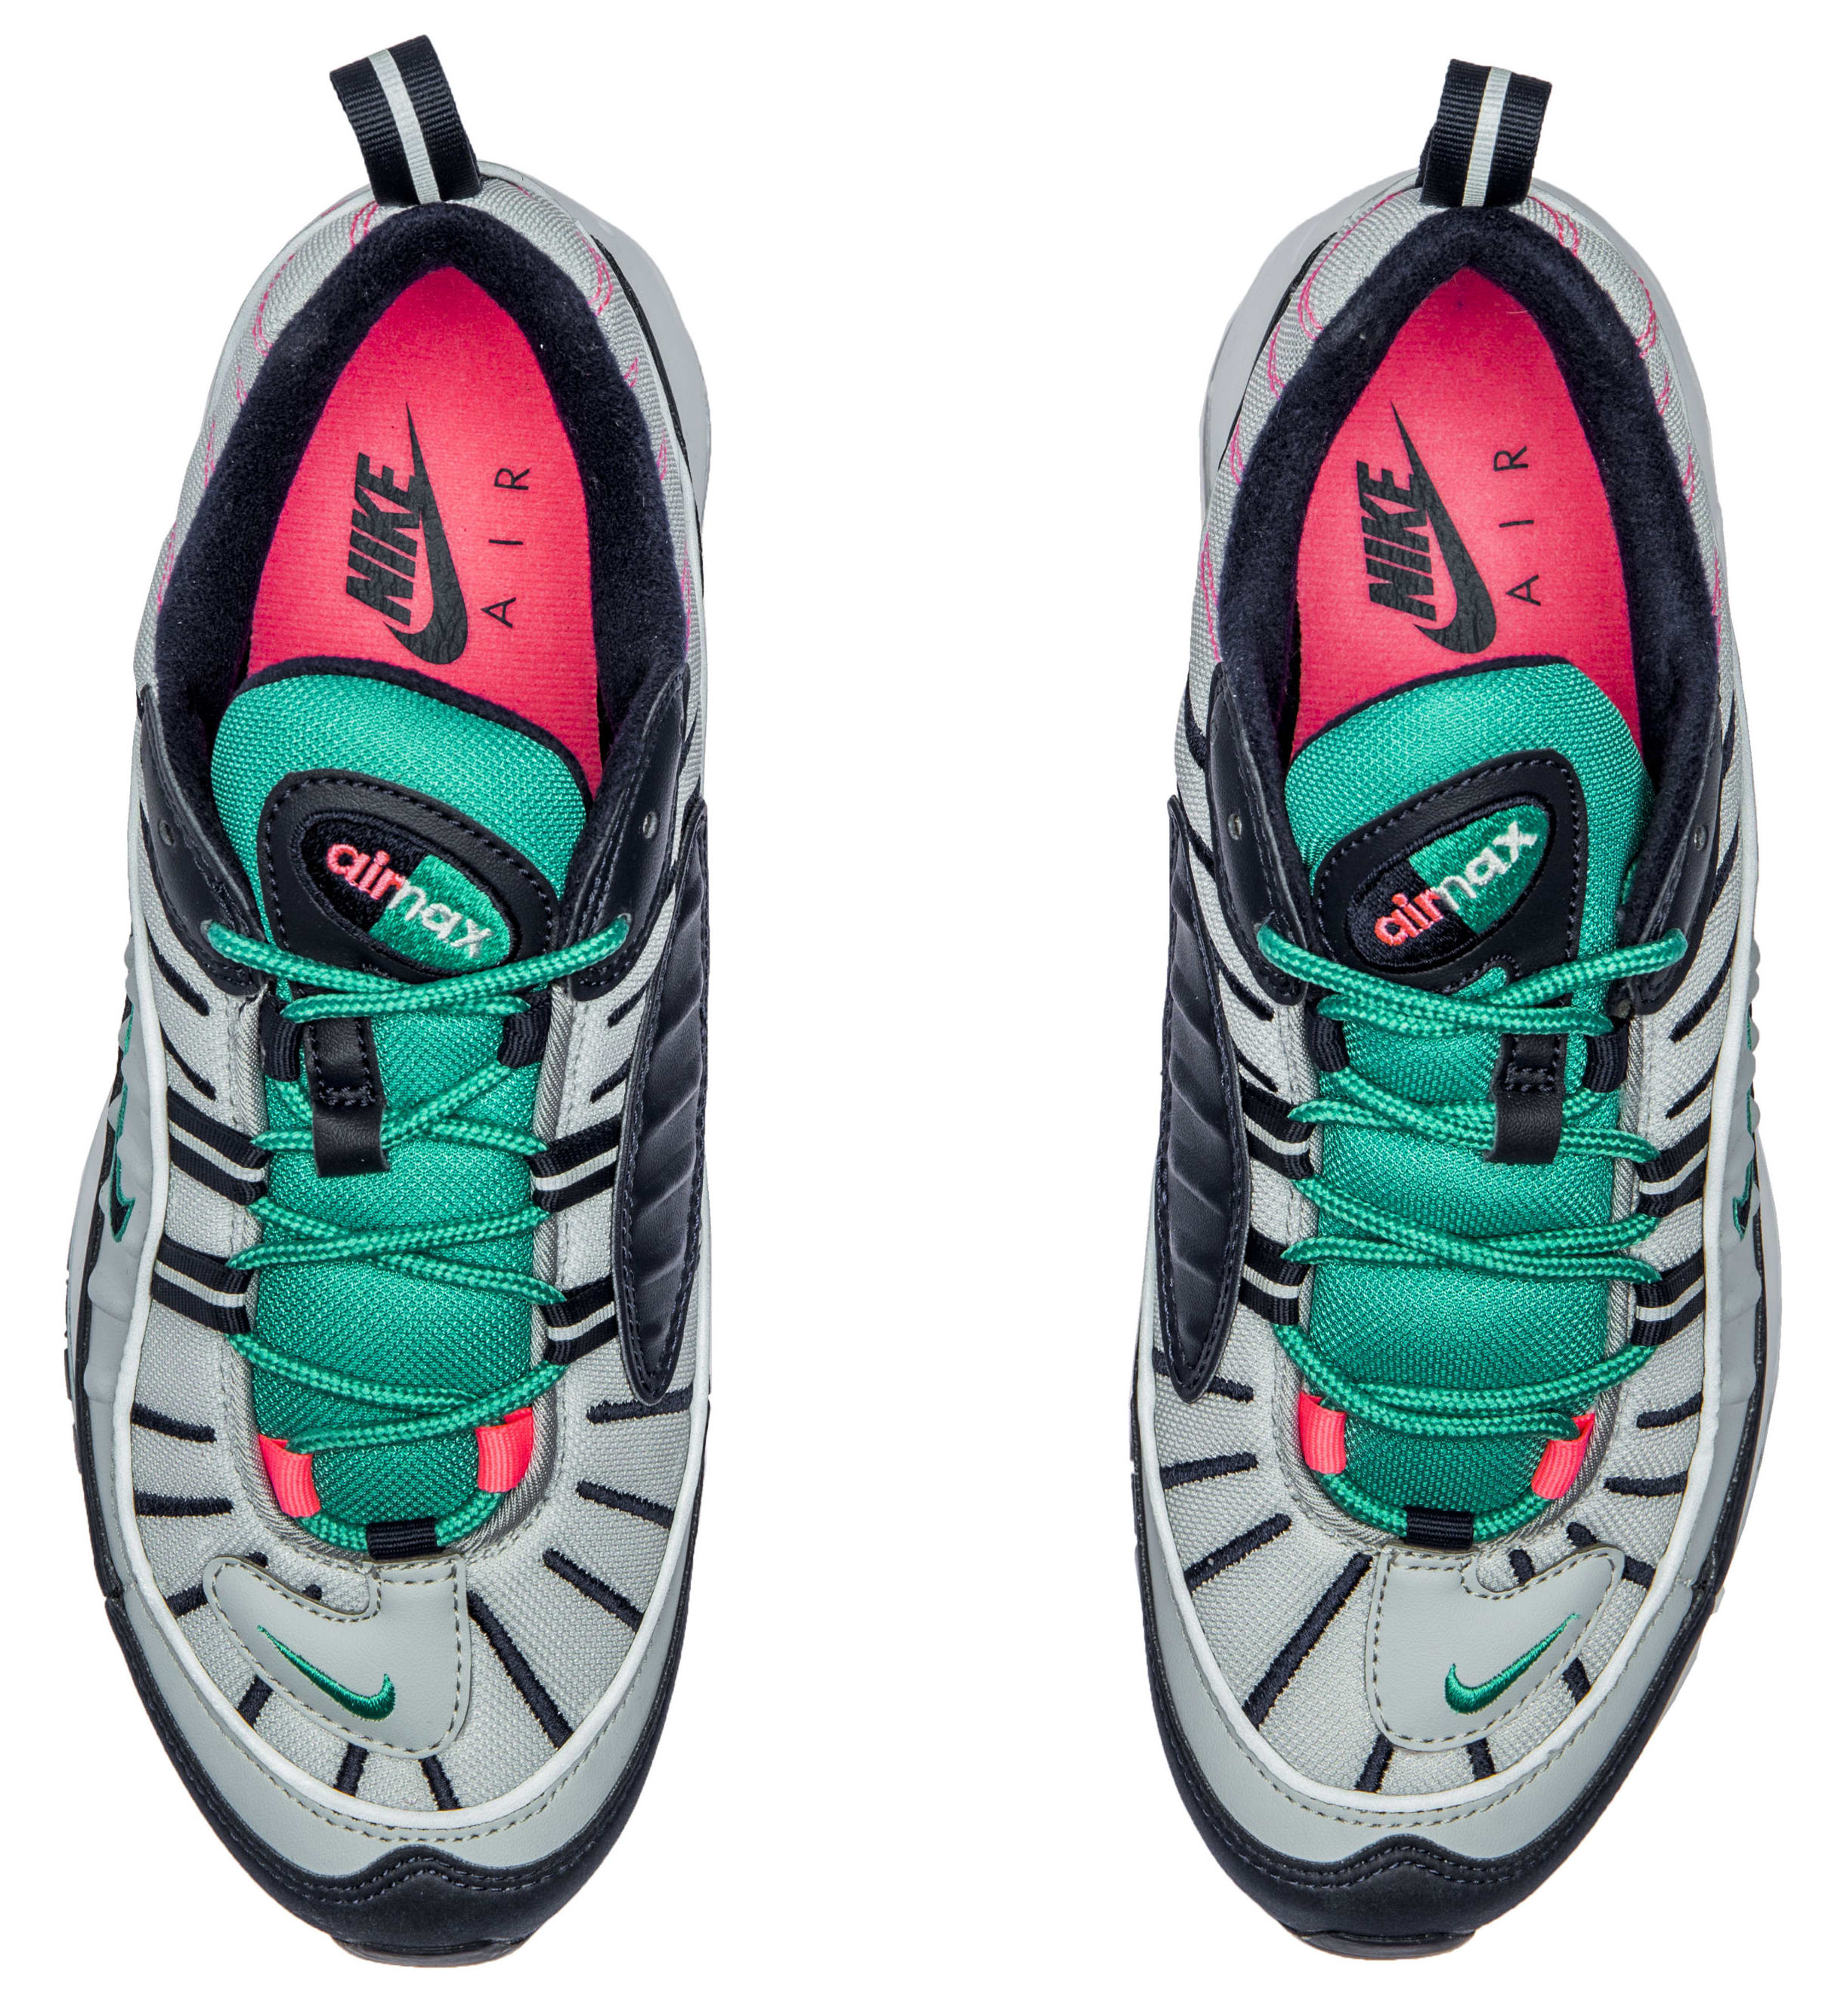 Nike Air Max 98 &#x27;Pure Platinum/Obsidian/Kinetic Green&#x27; 640744-005 (Top Pair)